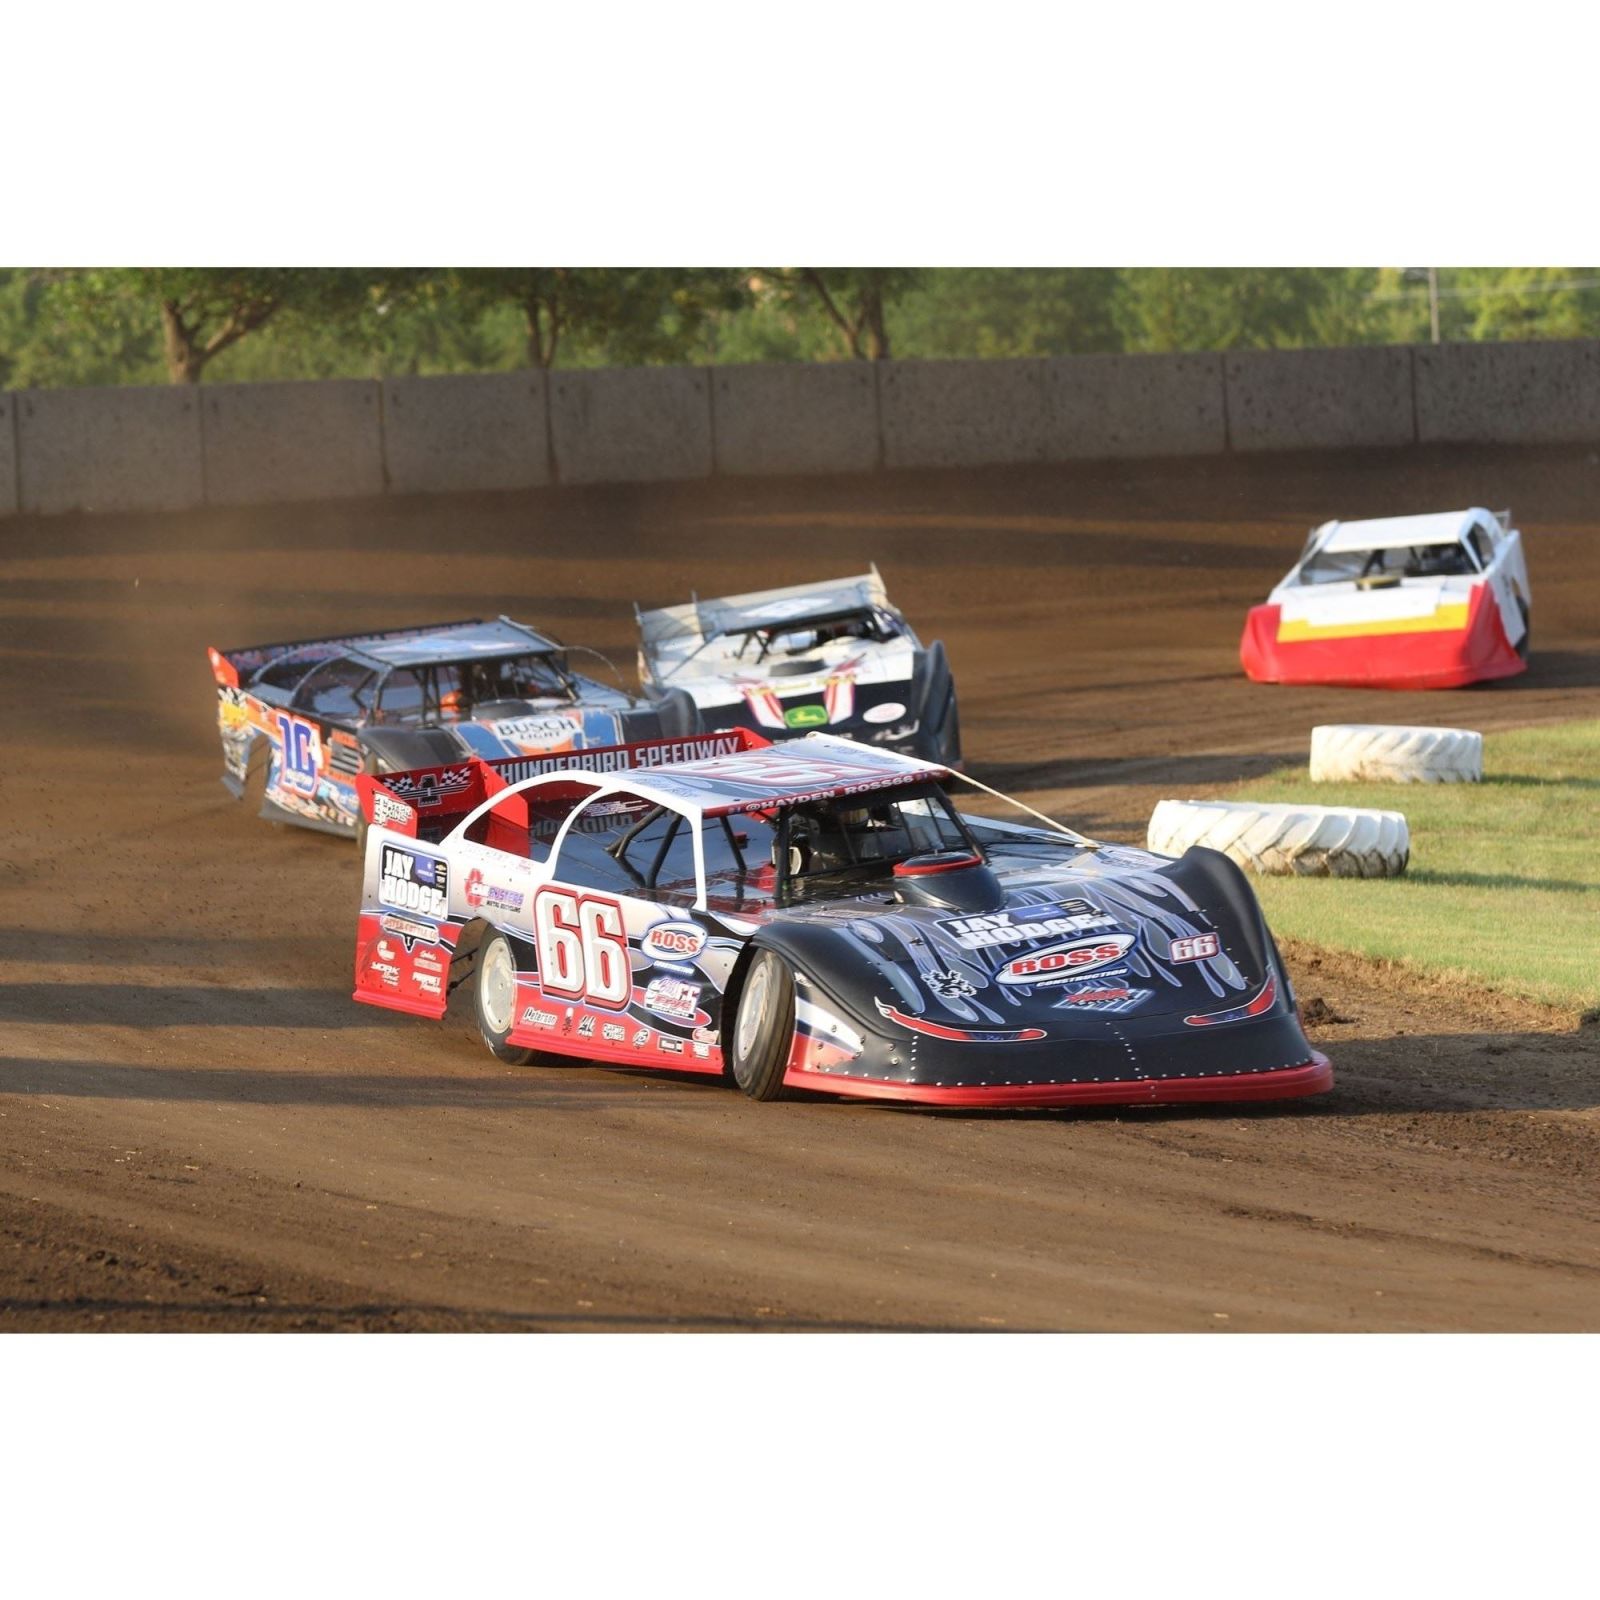 Championship Dirt Track Auto Racing at the Kansas State Fair Photo